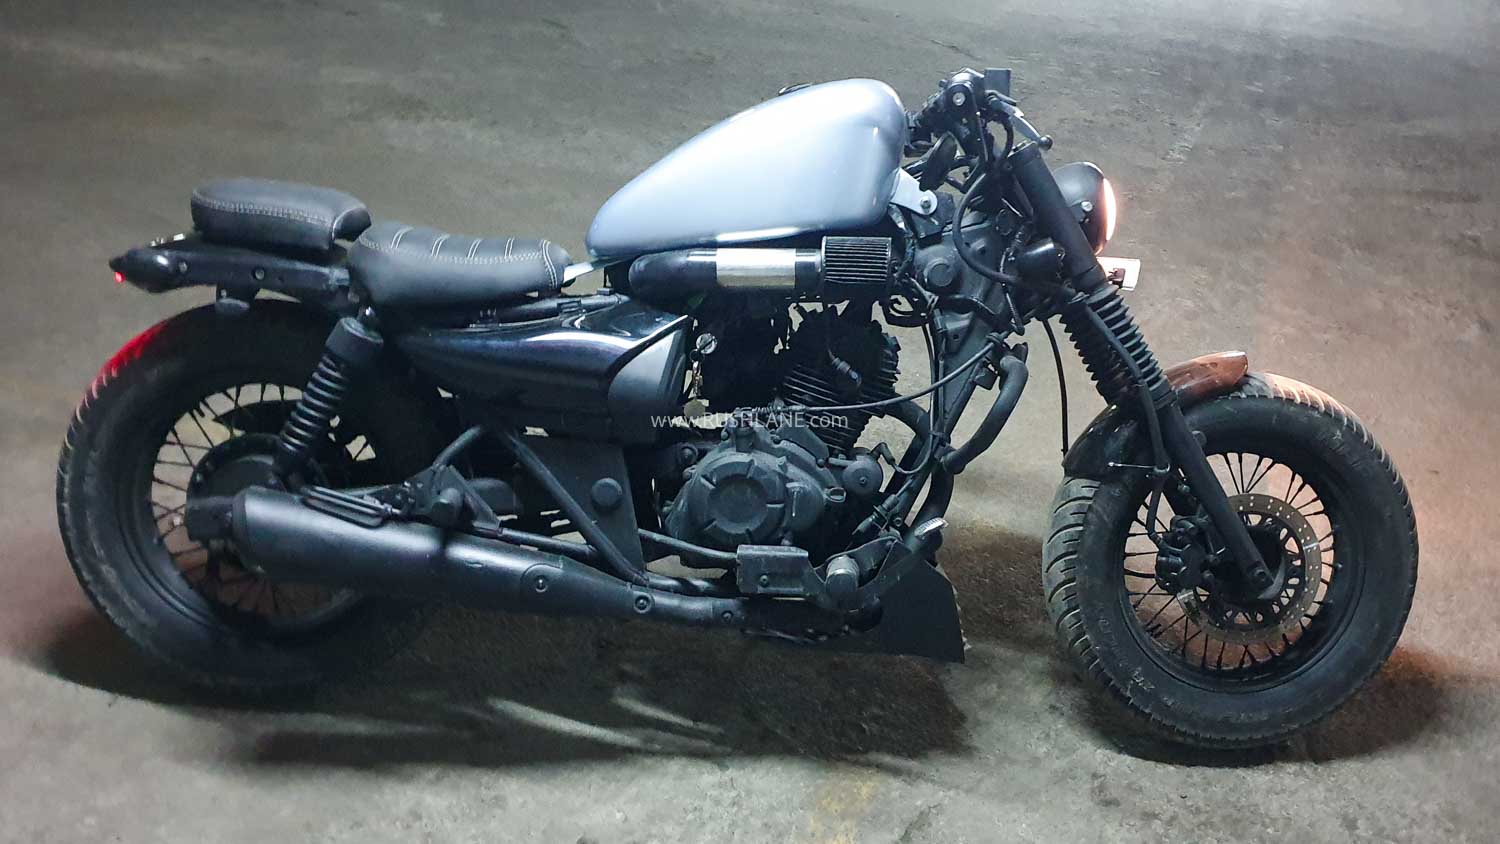 Bajaj Pulsar Avenger Modified To Look Like Harley Davidson